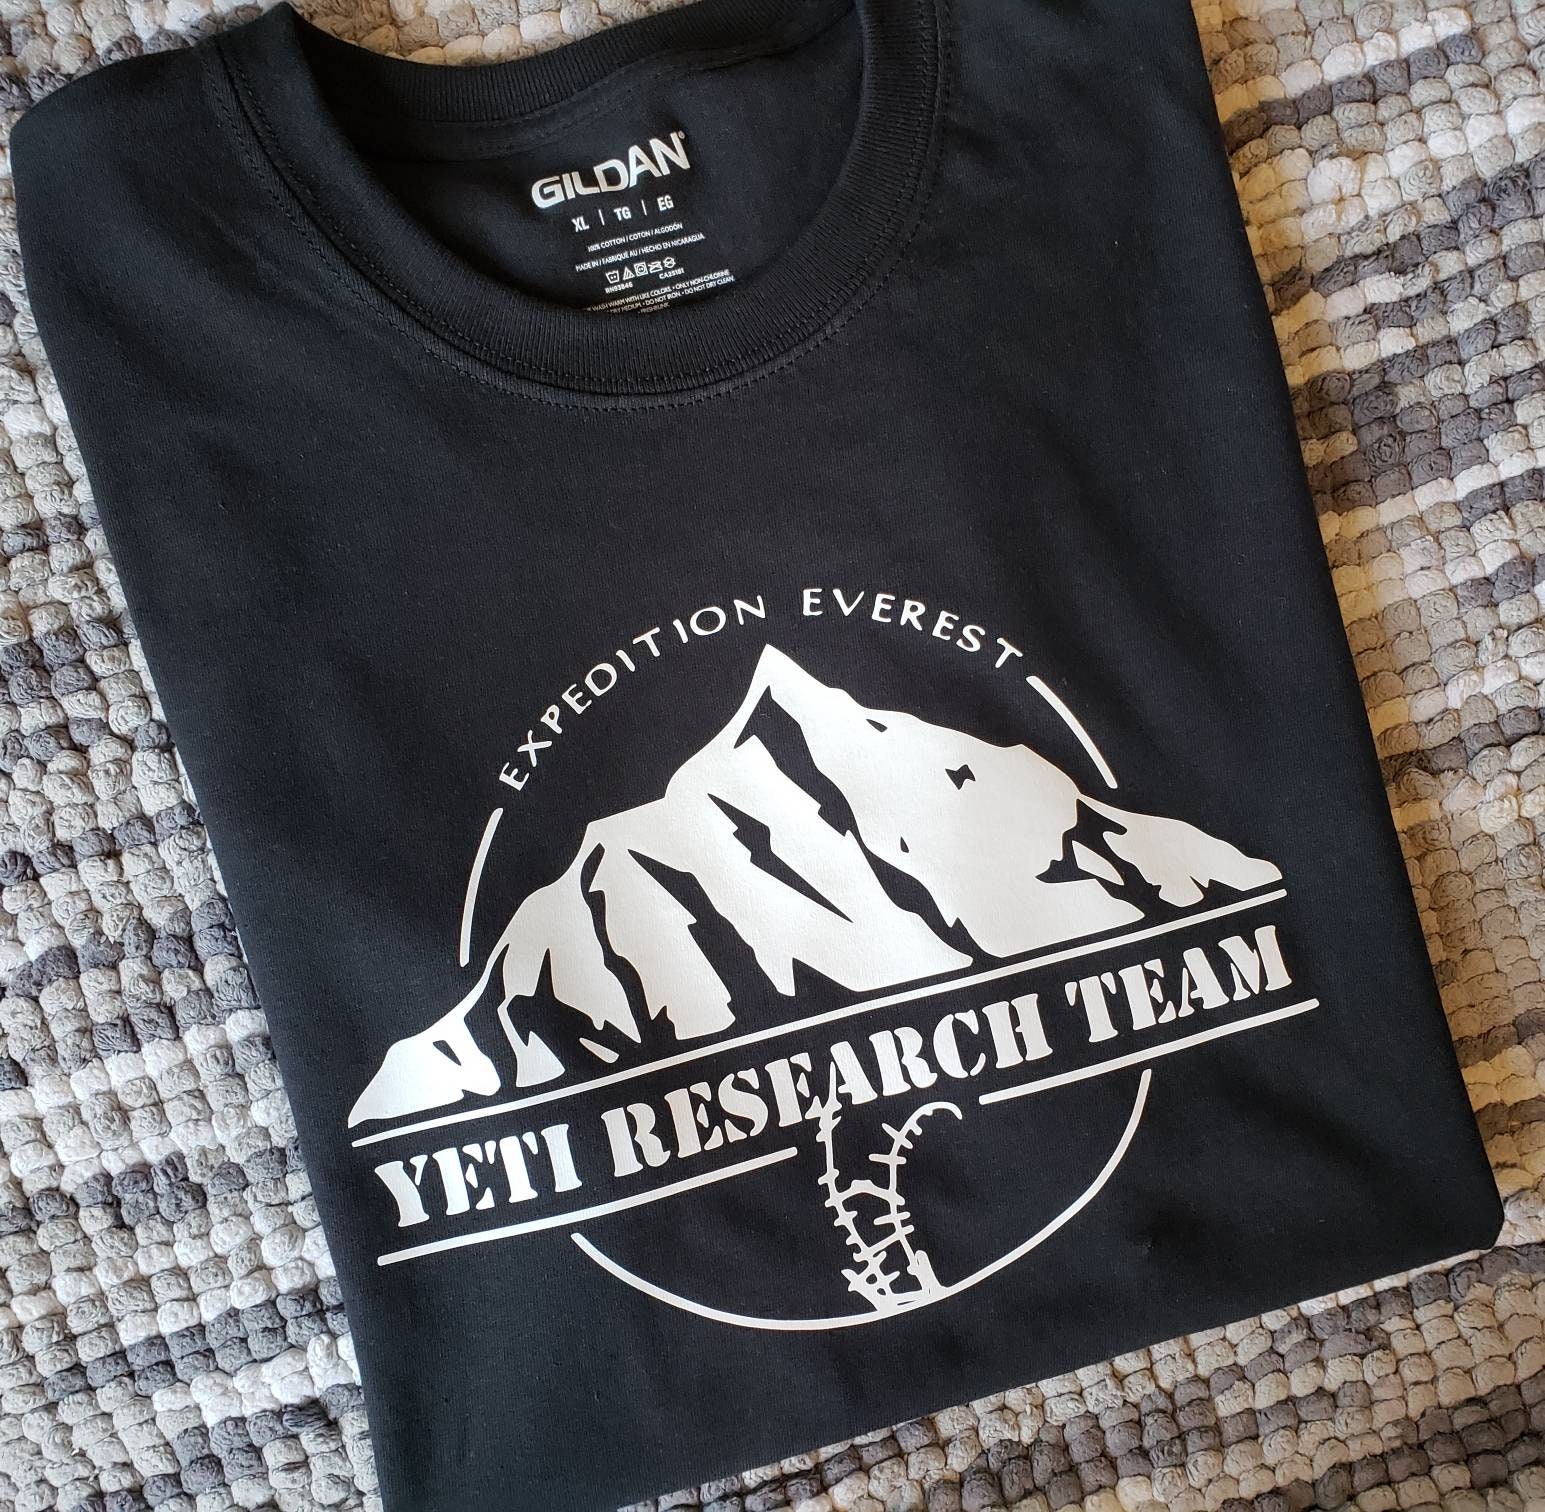 Expedition Everest Yeti Big Feet Plush & Youth T-Shirt Arrive at Walt Disney  World - WDW News Today